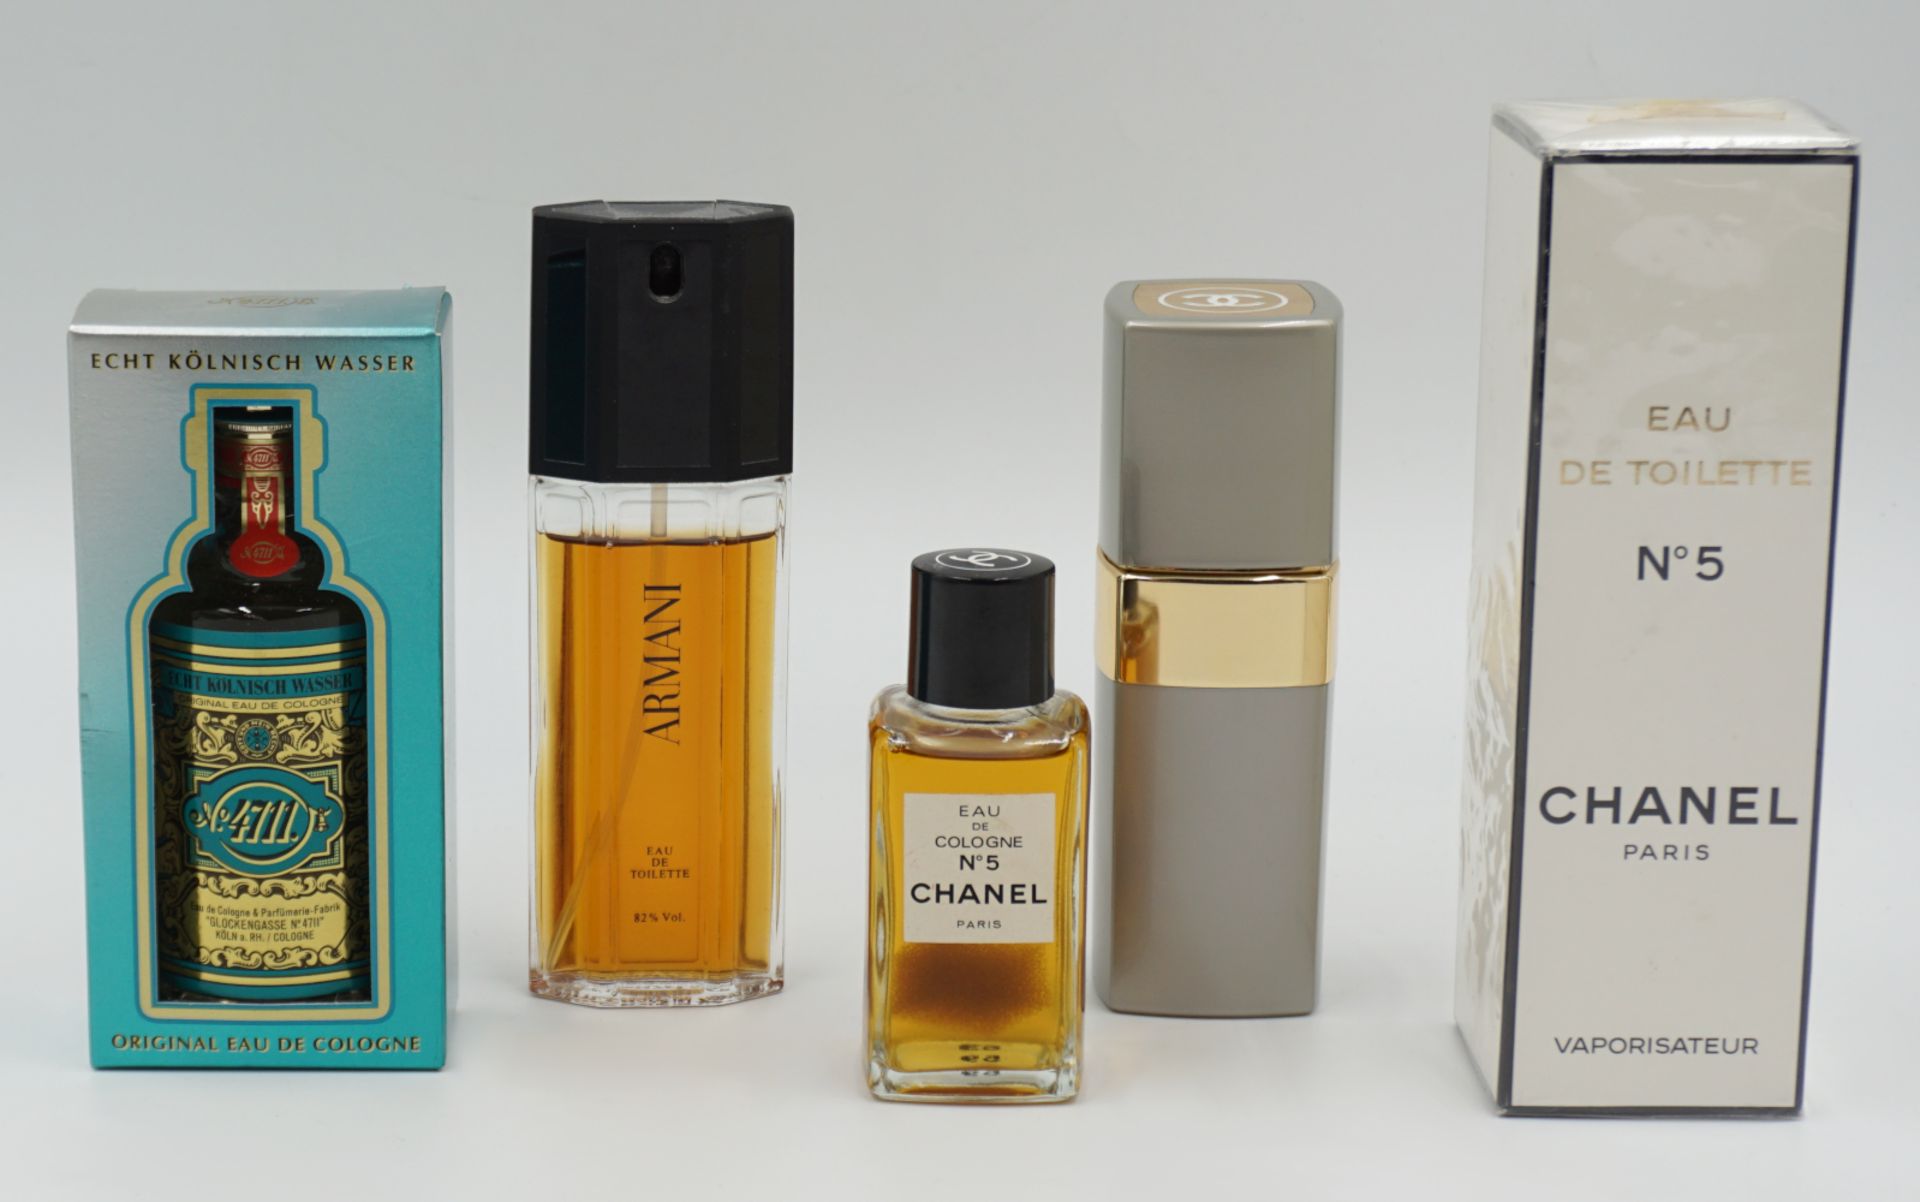 3 Markenparfums/1 Zerstäuber CHANEL "N° 5 Eau de Toilette/Eau de Cologne" und N° 19 Eau de Toilette